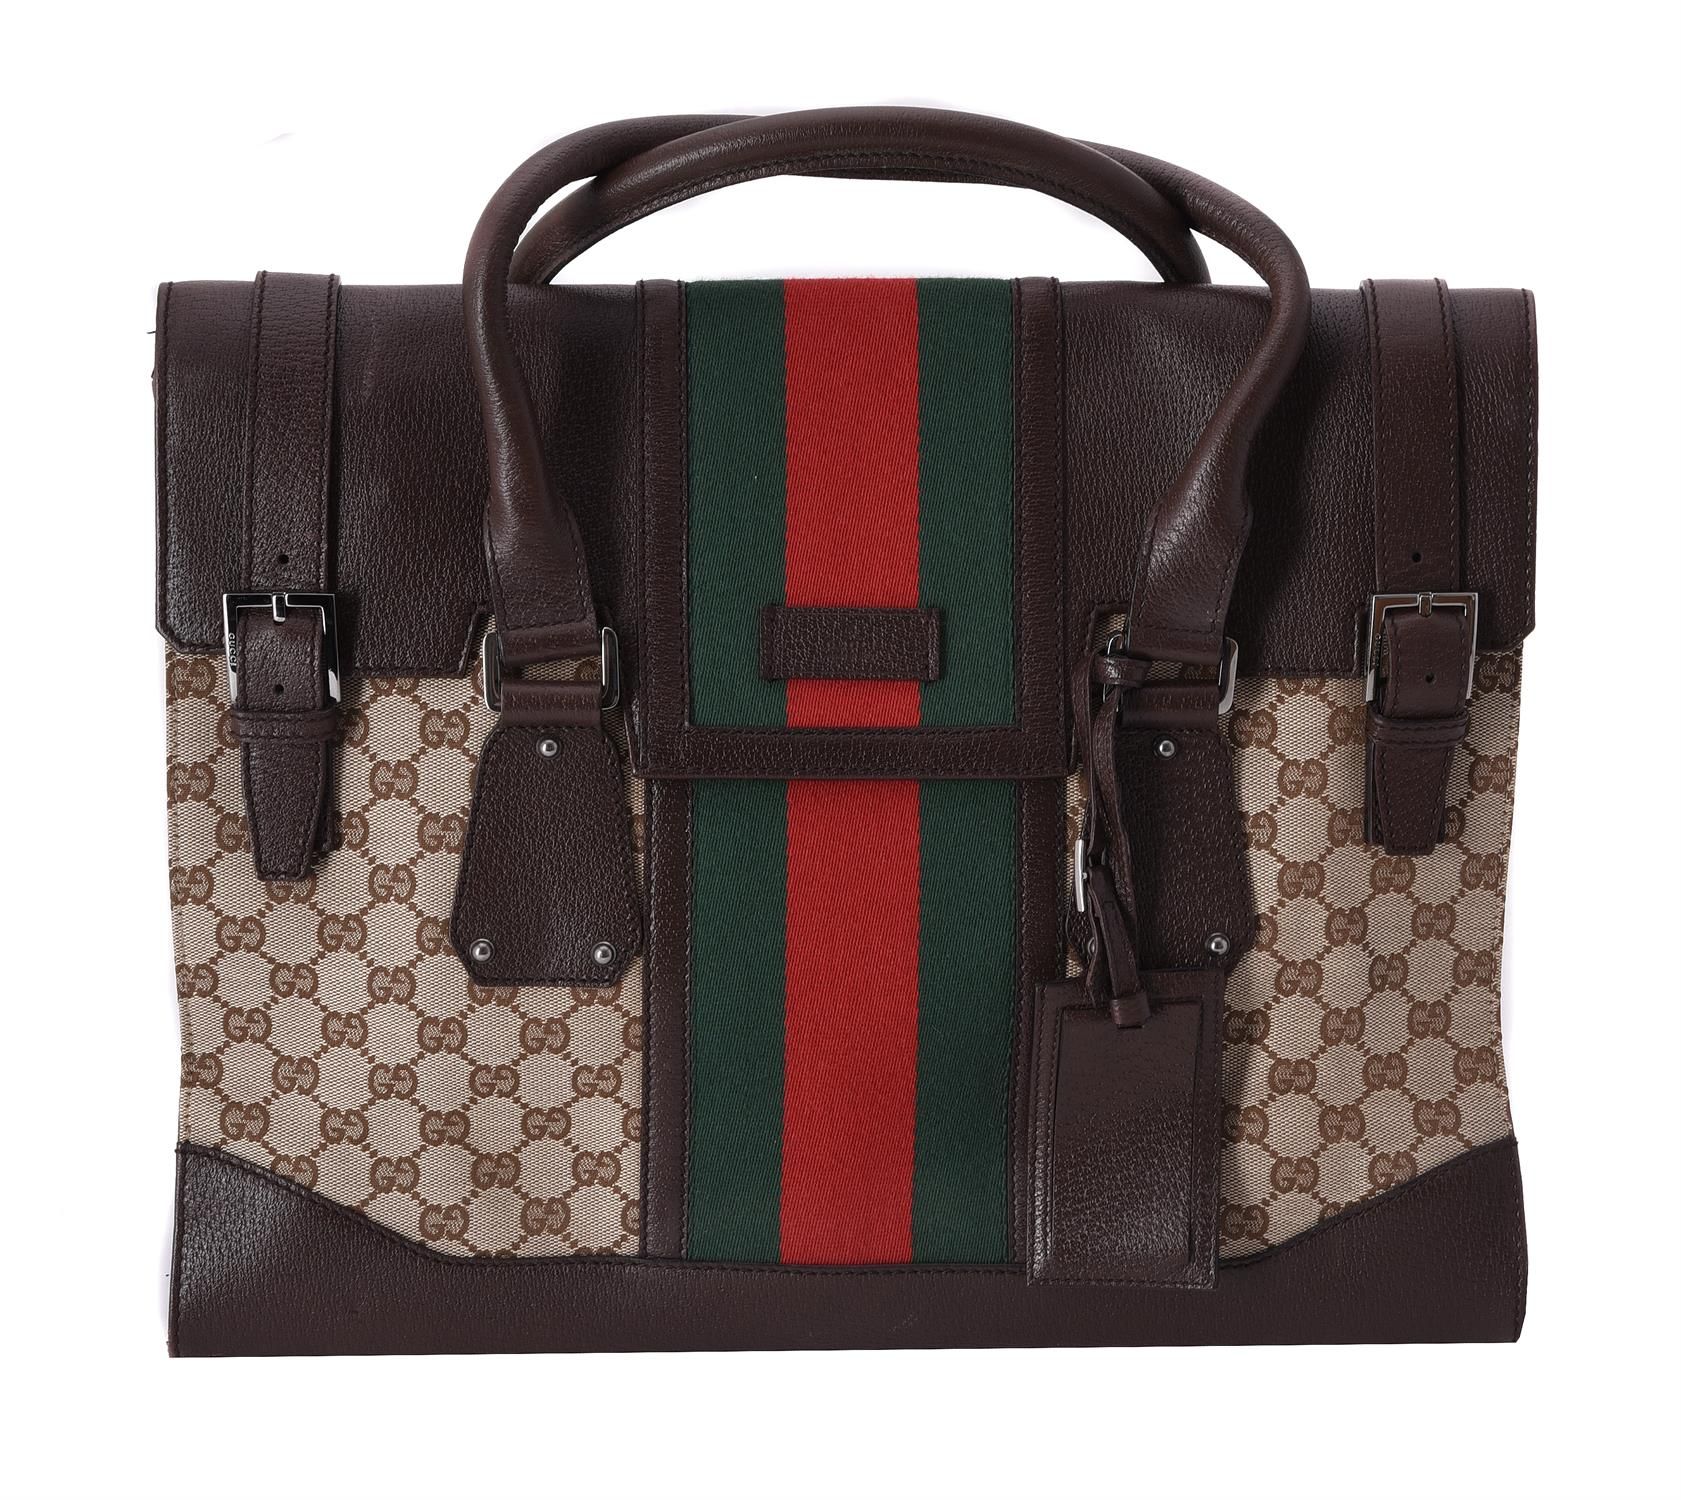 Gucci, a leather and canvas handbag Gucci, a leather and canvas handbag, with tw&hellip;